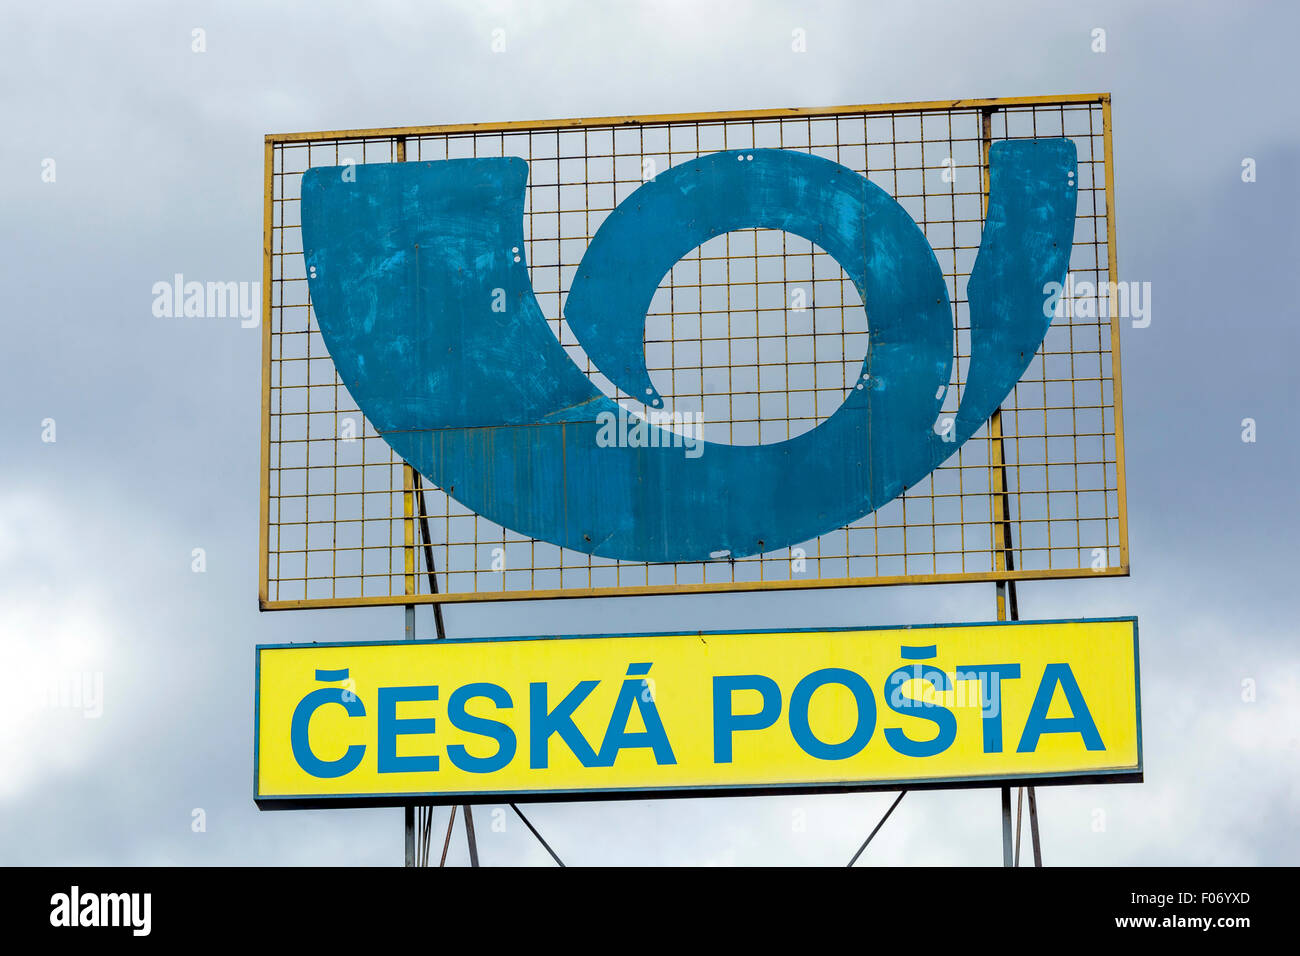 Ceska posta, Czech Post logo Stock Photo